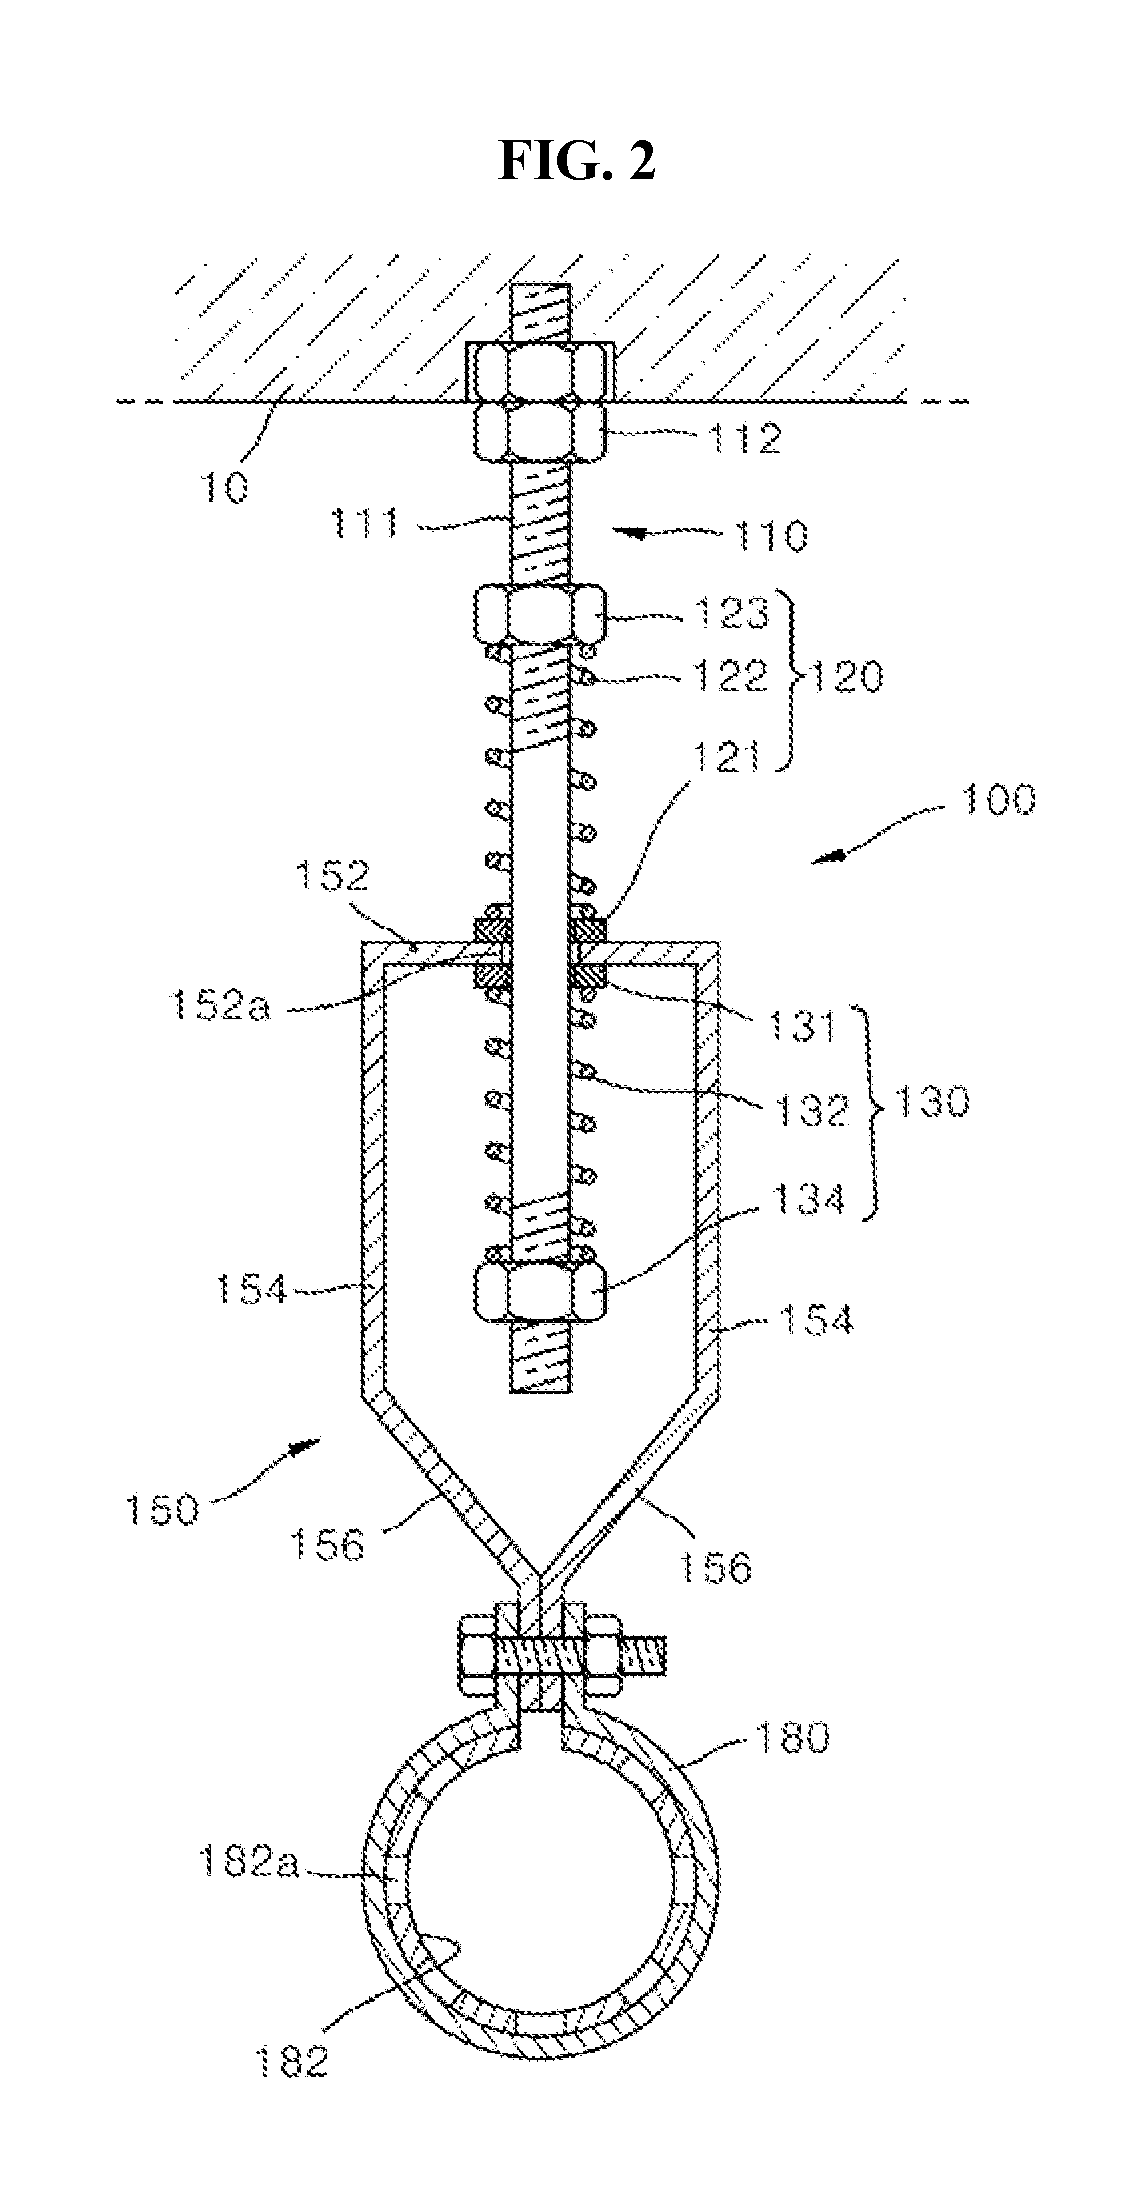 Hanger-type vibration isolating device